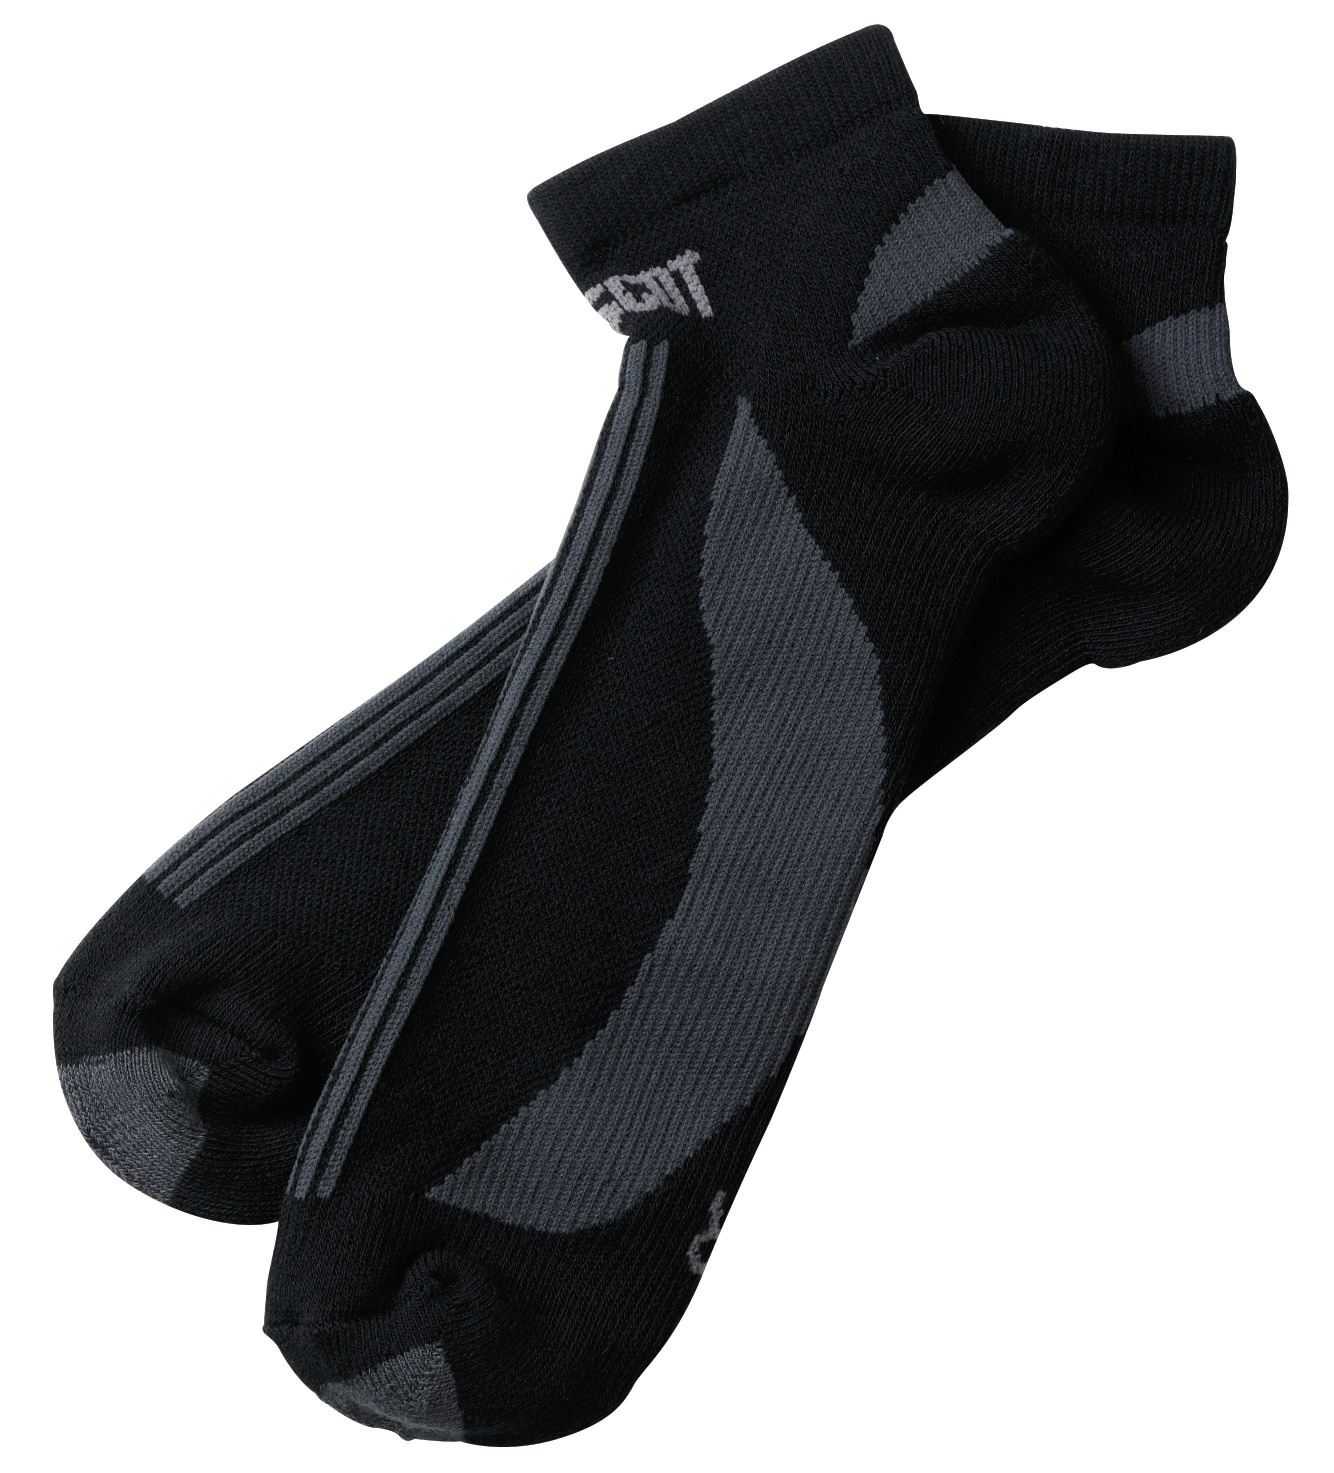 MASCOT Compete Socken "Maseru" Nr. 50411-881-0918